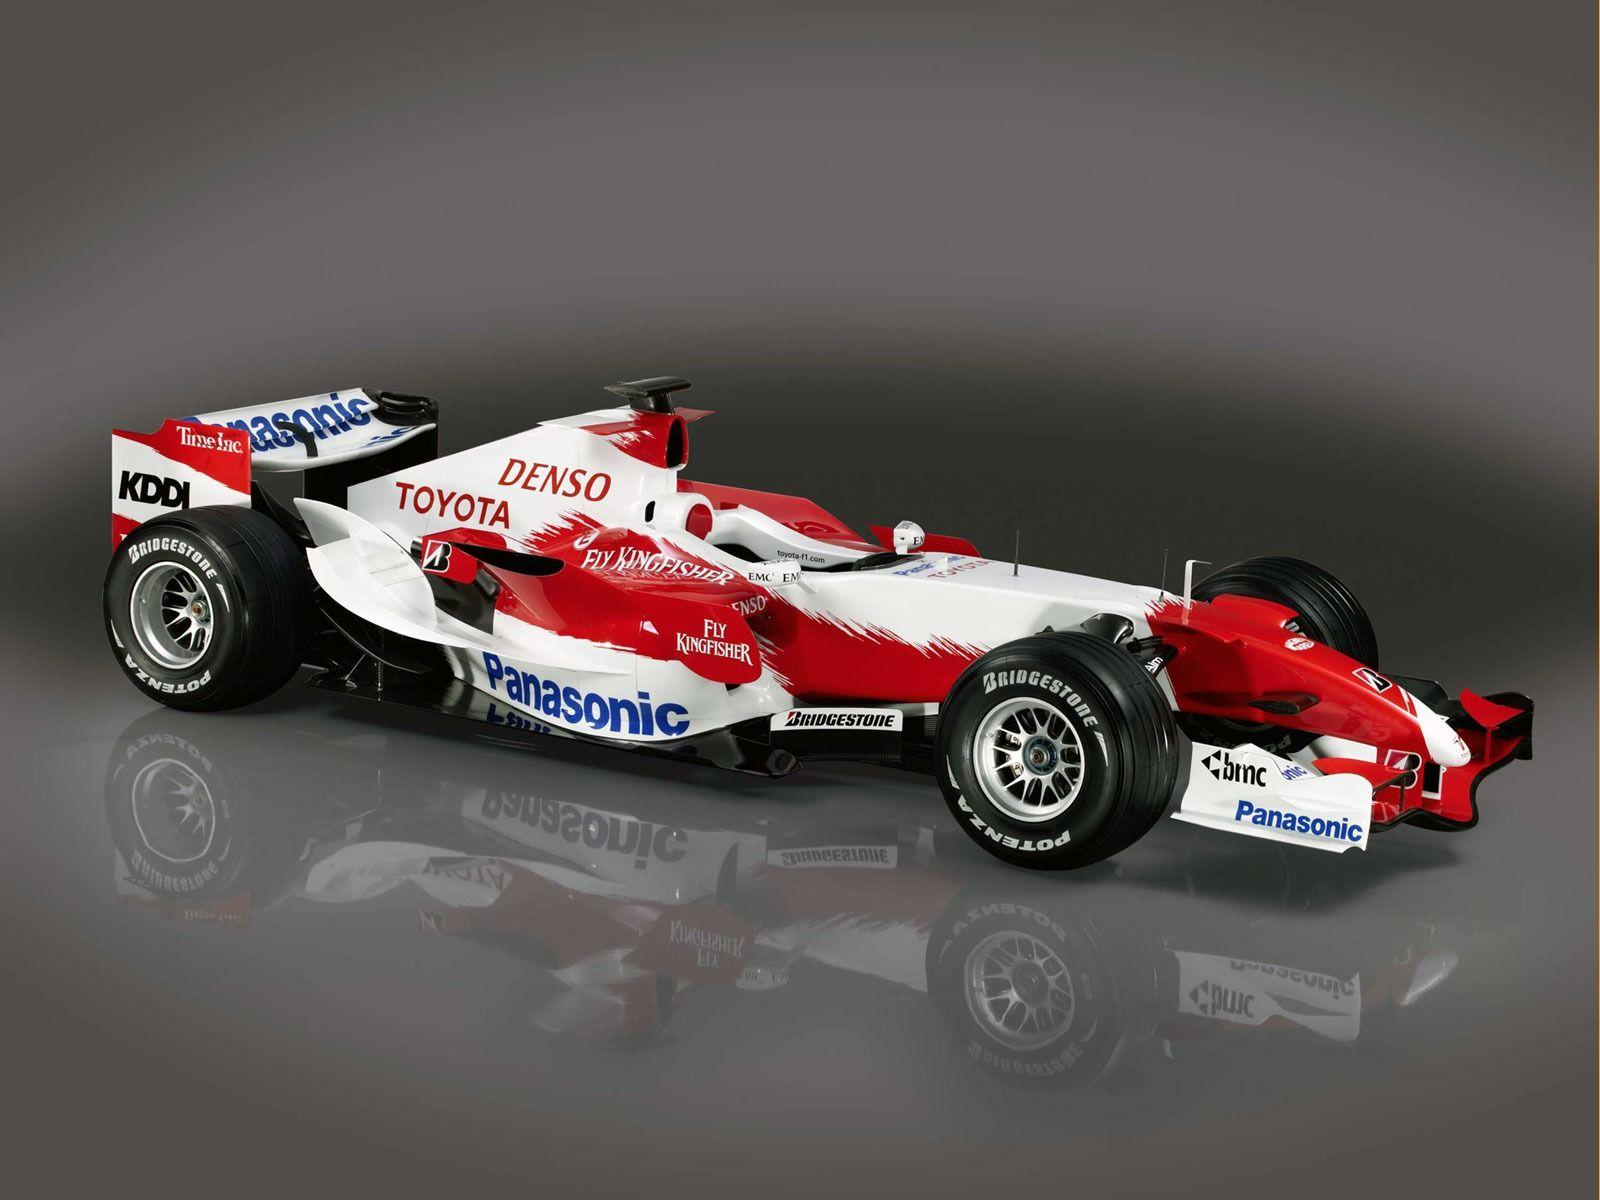 F1 Wallpaper Formula 1 Cars Wallpaper in jpg format for free download